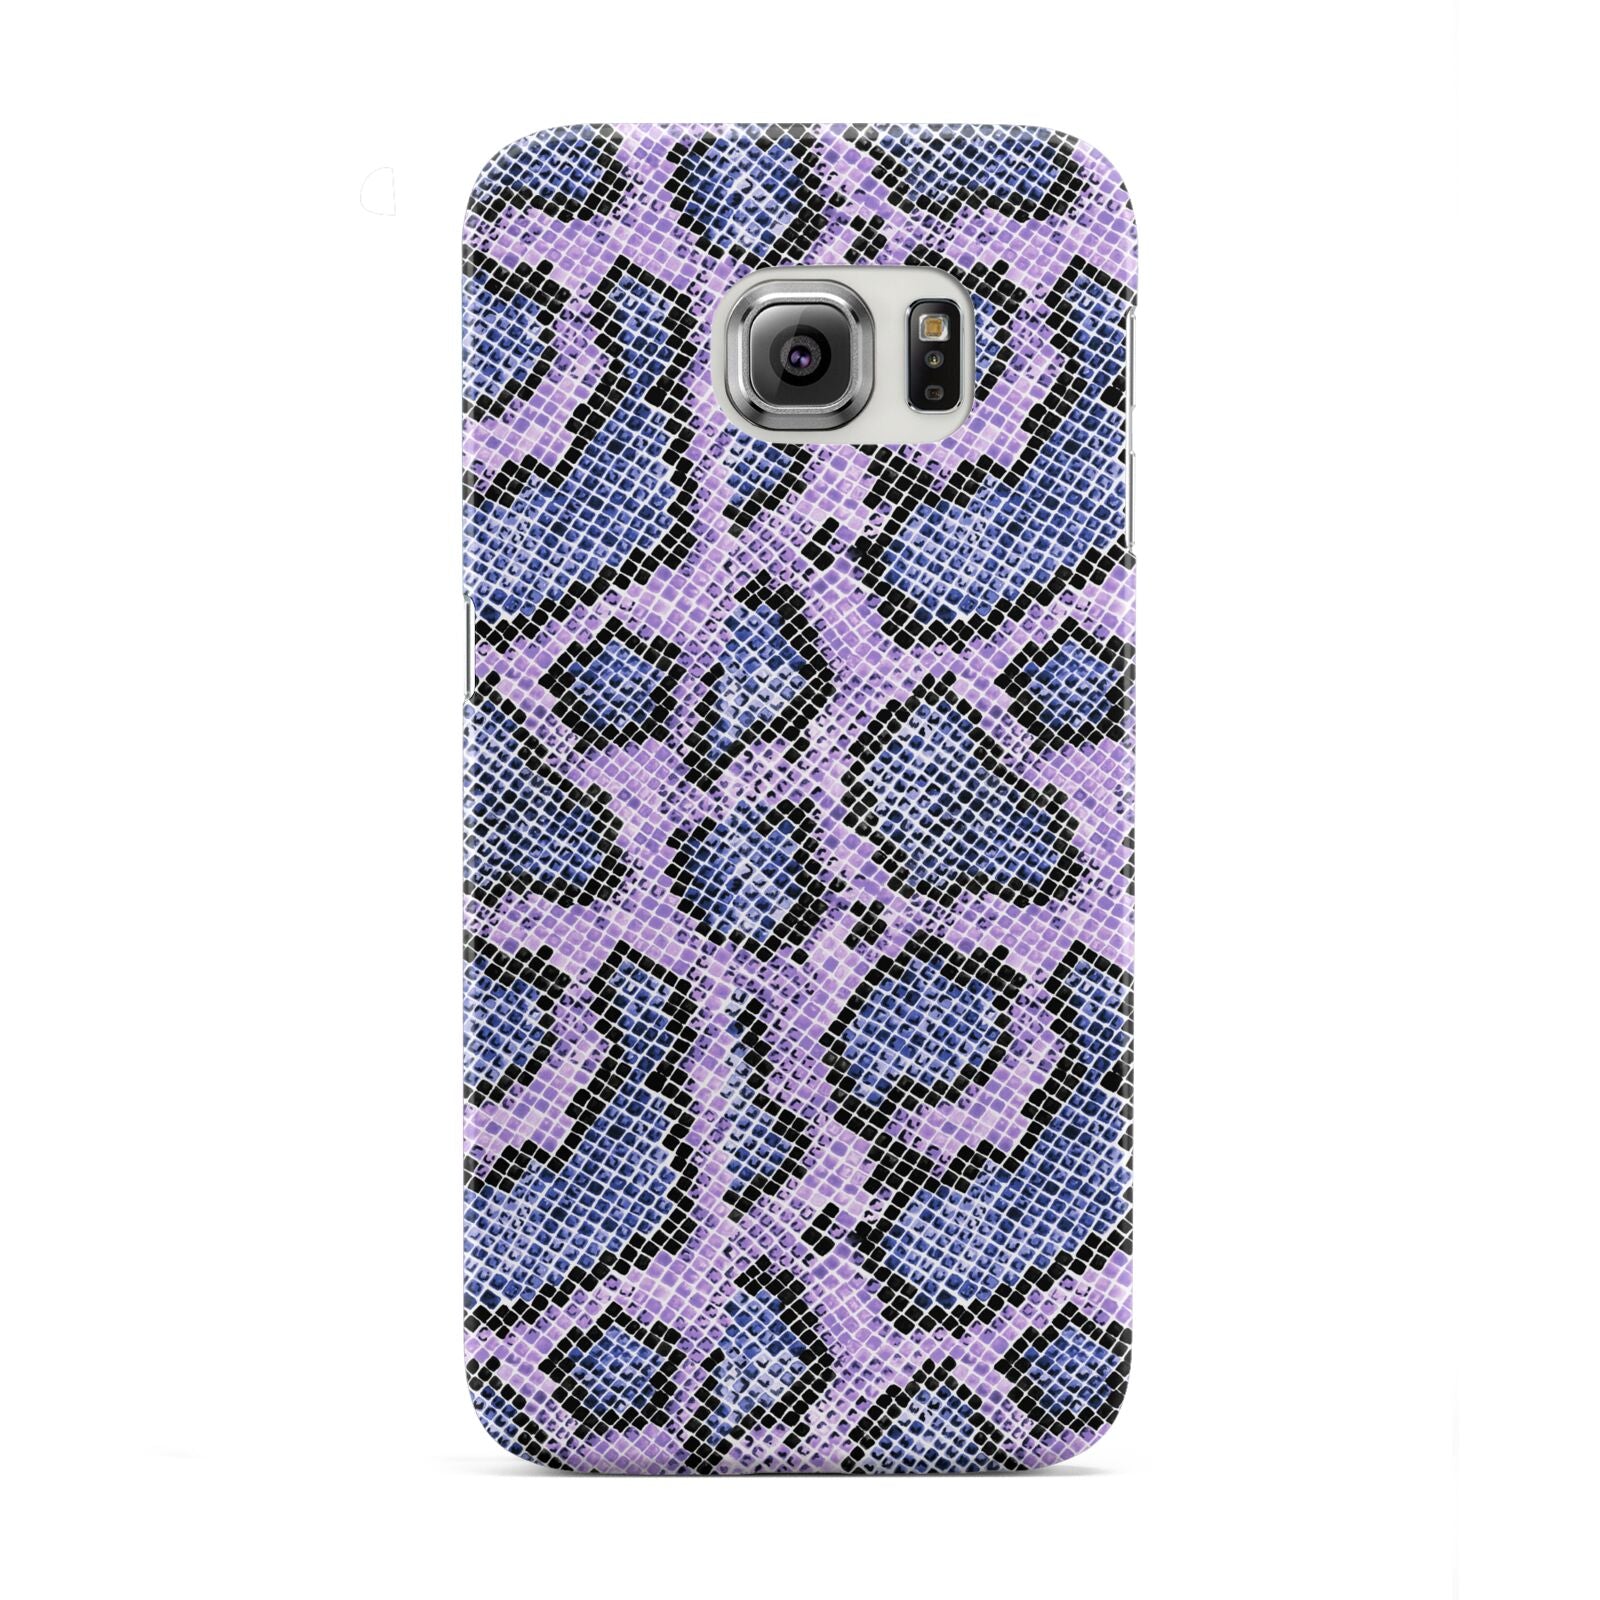 Purple And Blue Snakeskin Samsung Galaxy S6 Edge Case